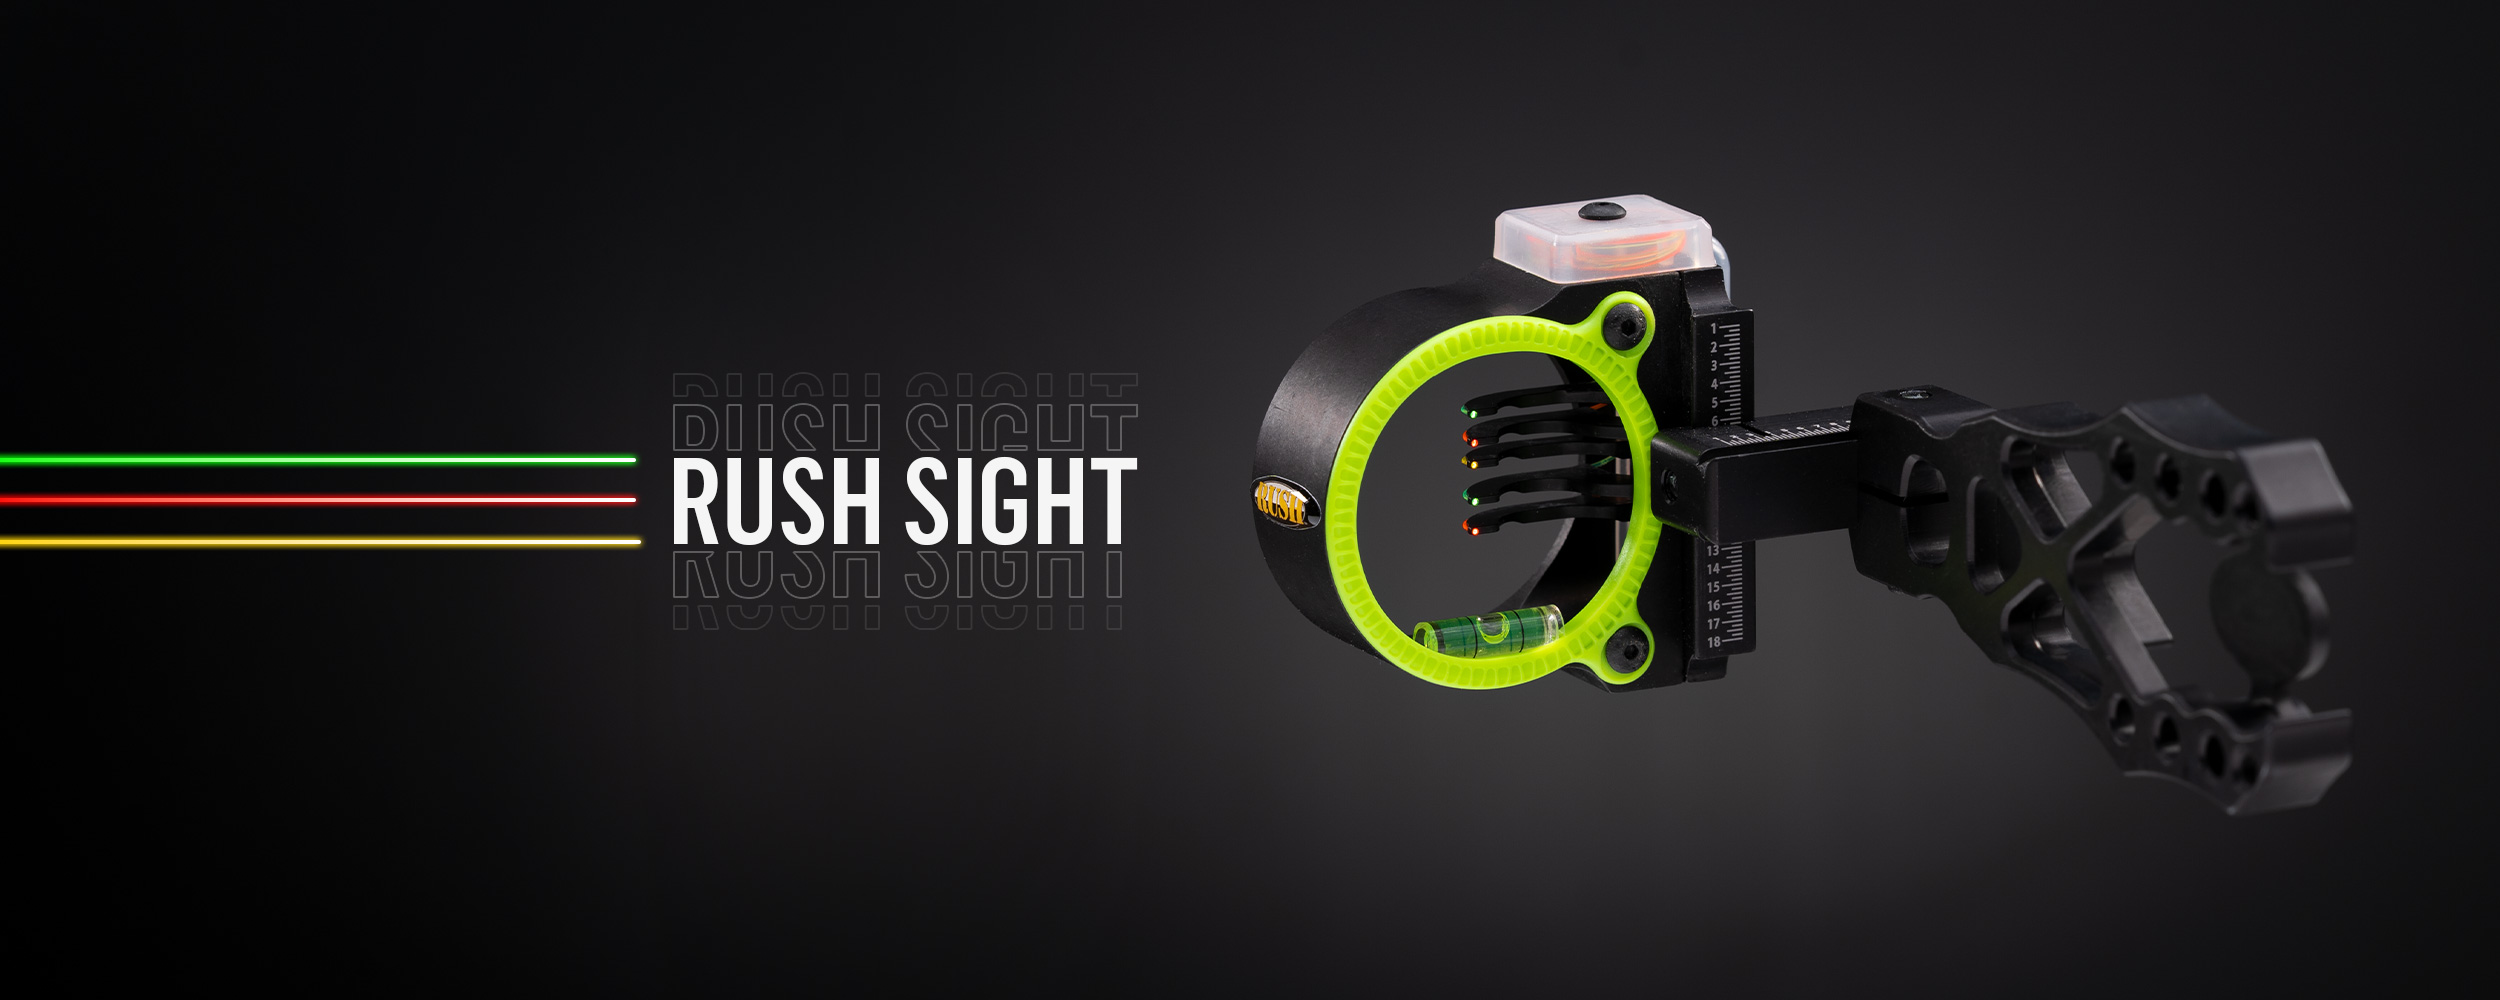 rush sight header image